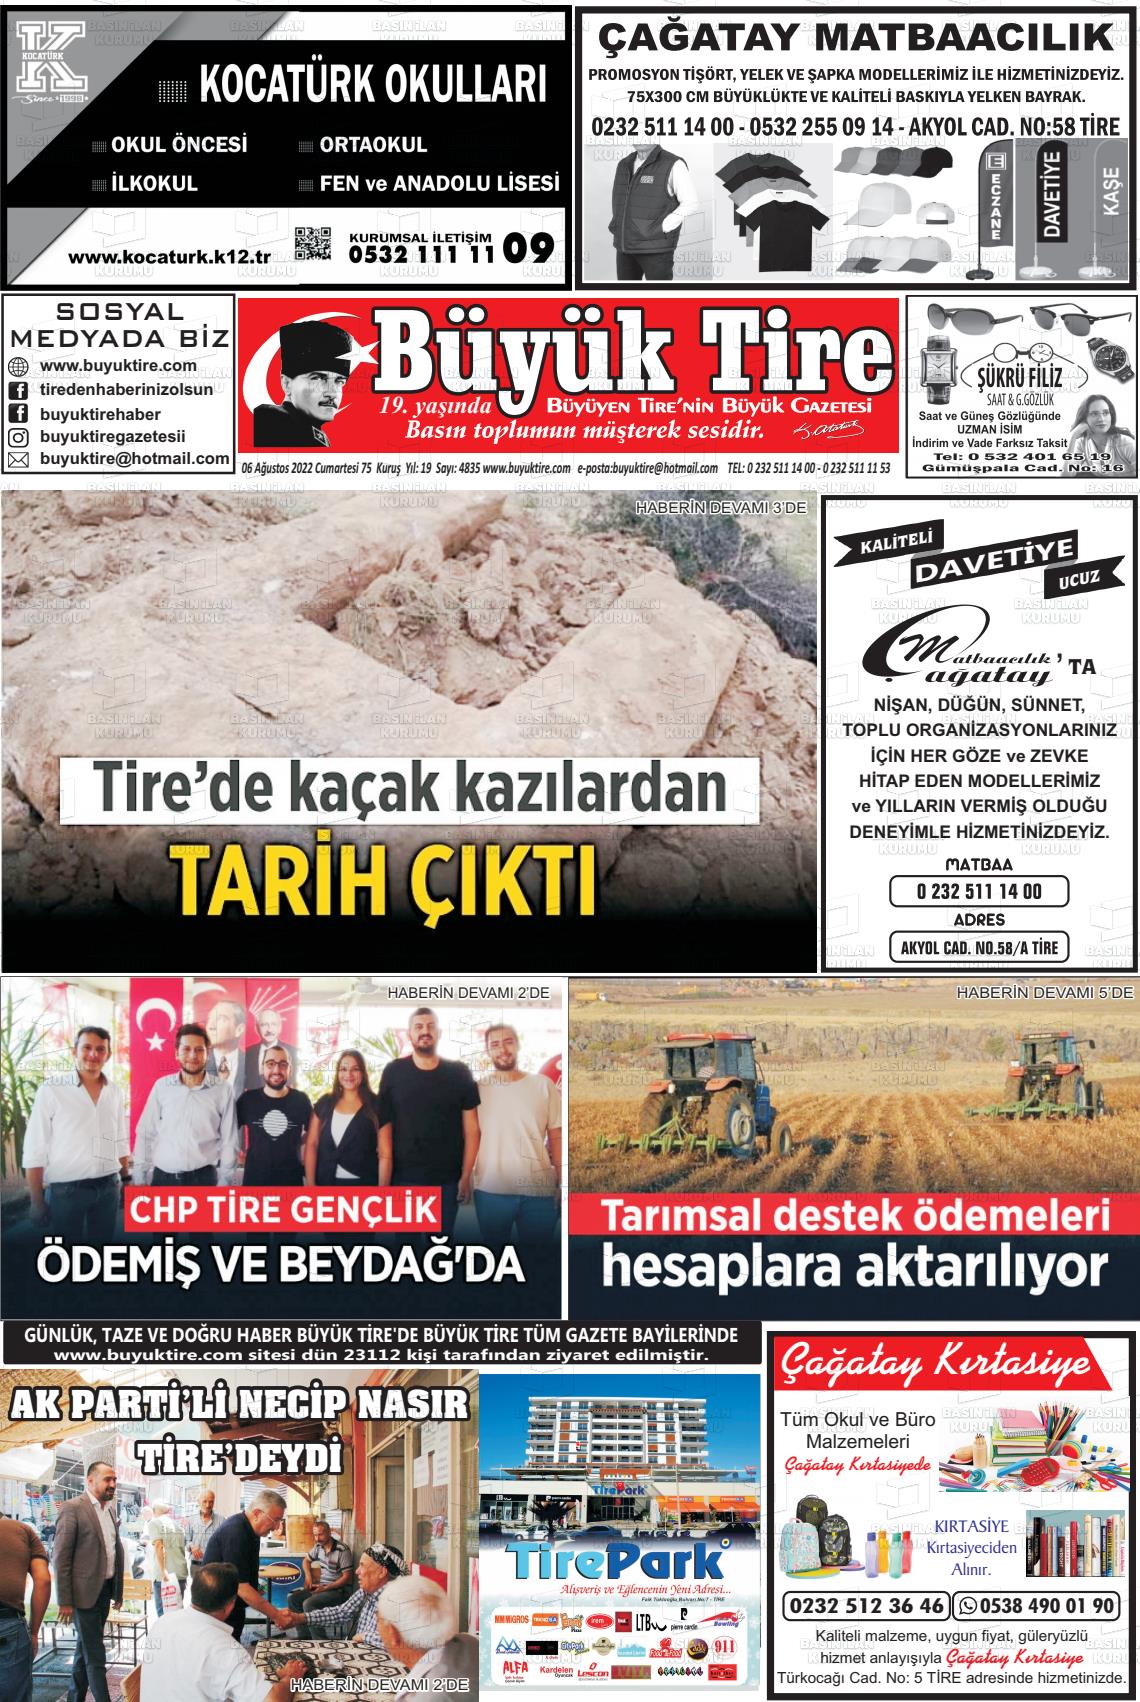 06 Ağustos 2022 Büyük Tire Gazete Manşeti